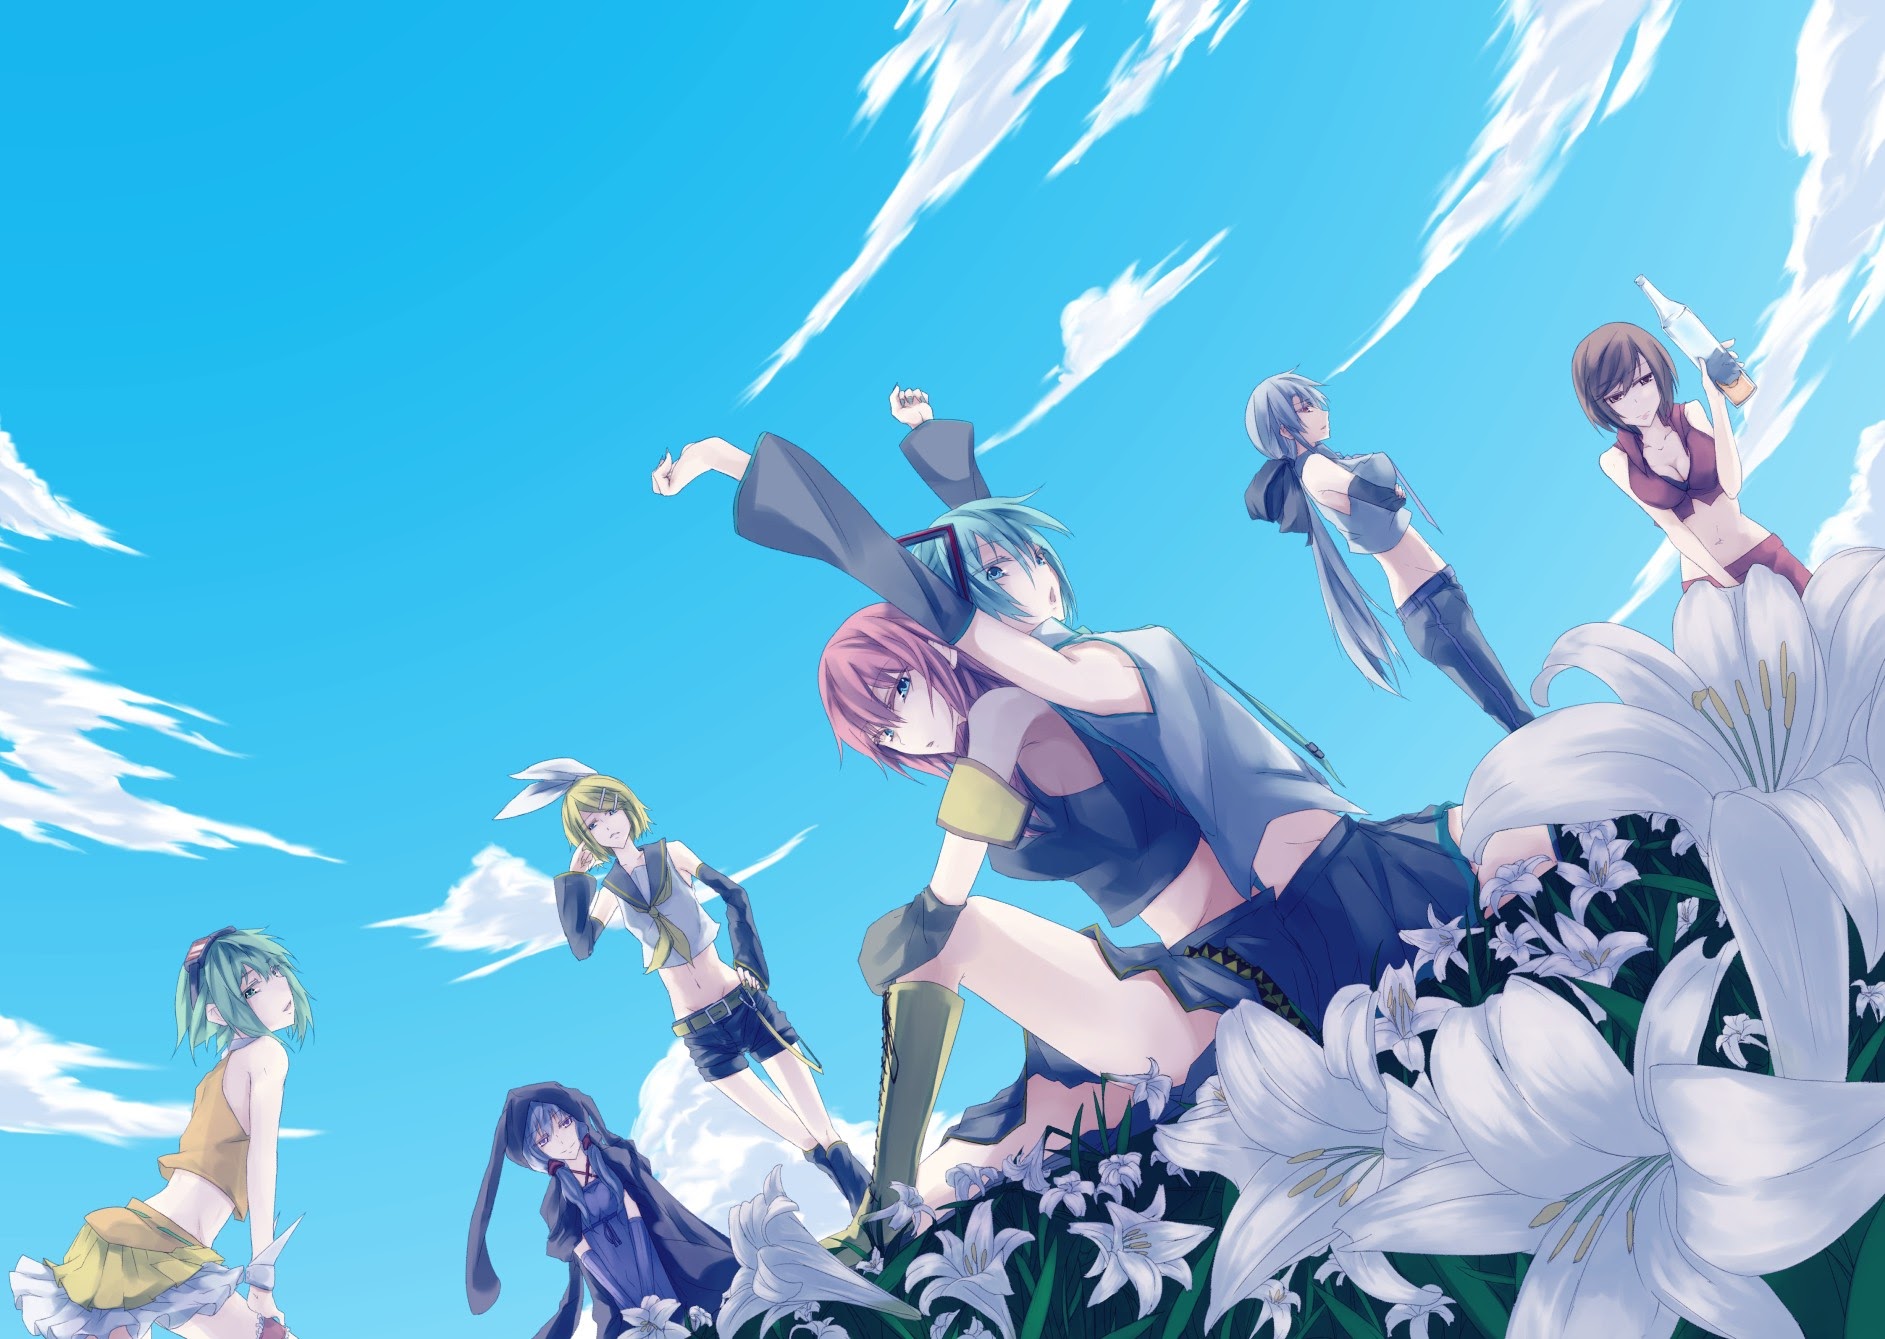 Baixe gratuitamente a imagem Anime, Vocaloid, Hatsune Miku, Luka Megurine, Rin Kagamine, Gumi (Vocaloide), Meiko (Vocaloid), Yuzuki Yukari, Haku Yowane (Vocaloid) na área de trabalho do seu PC